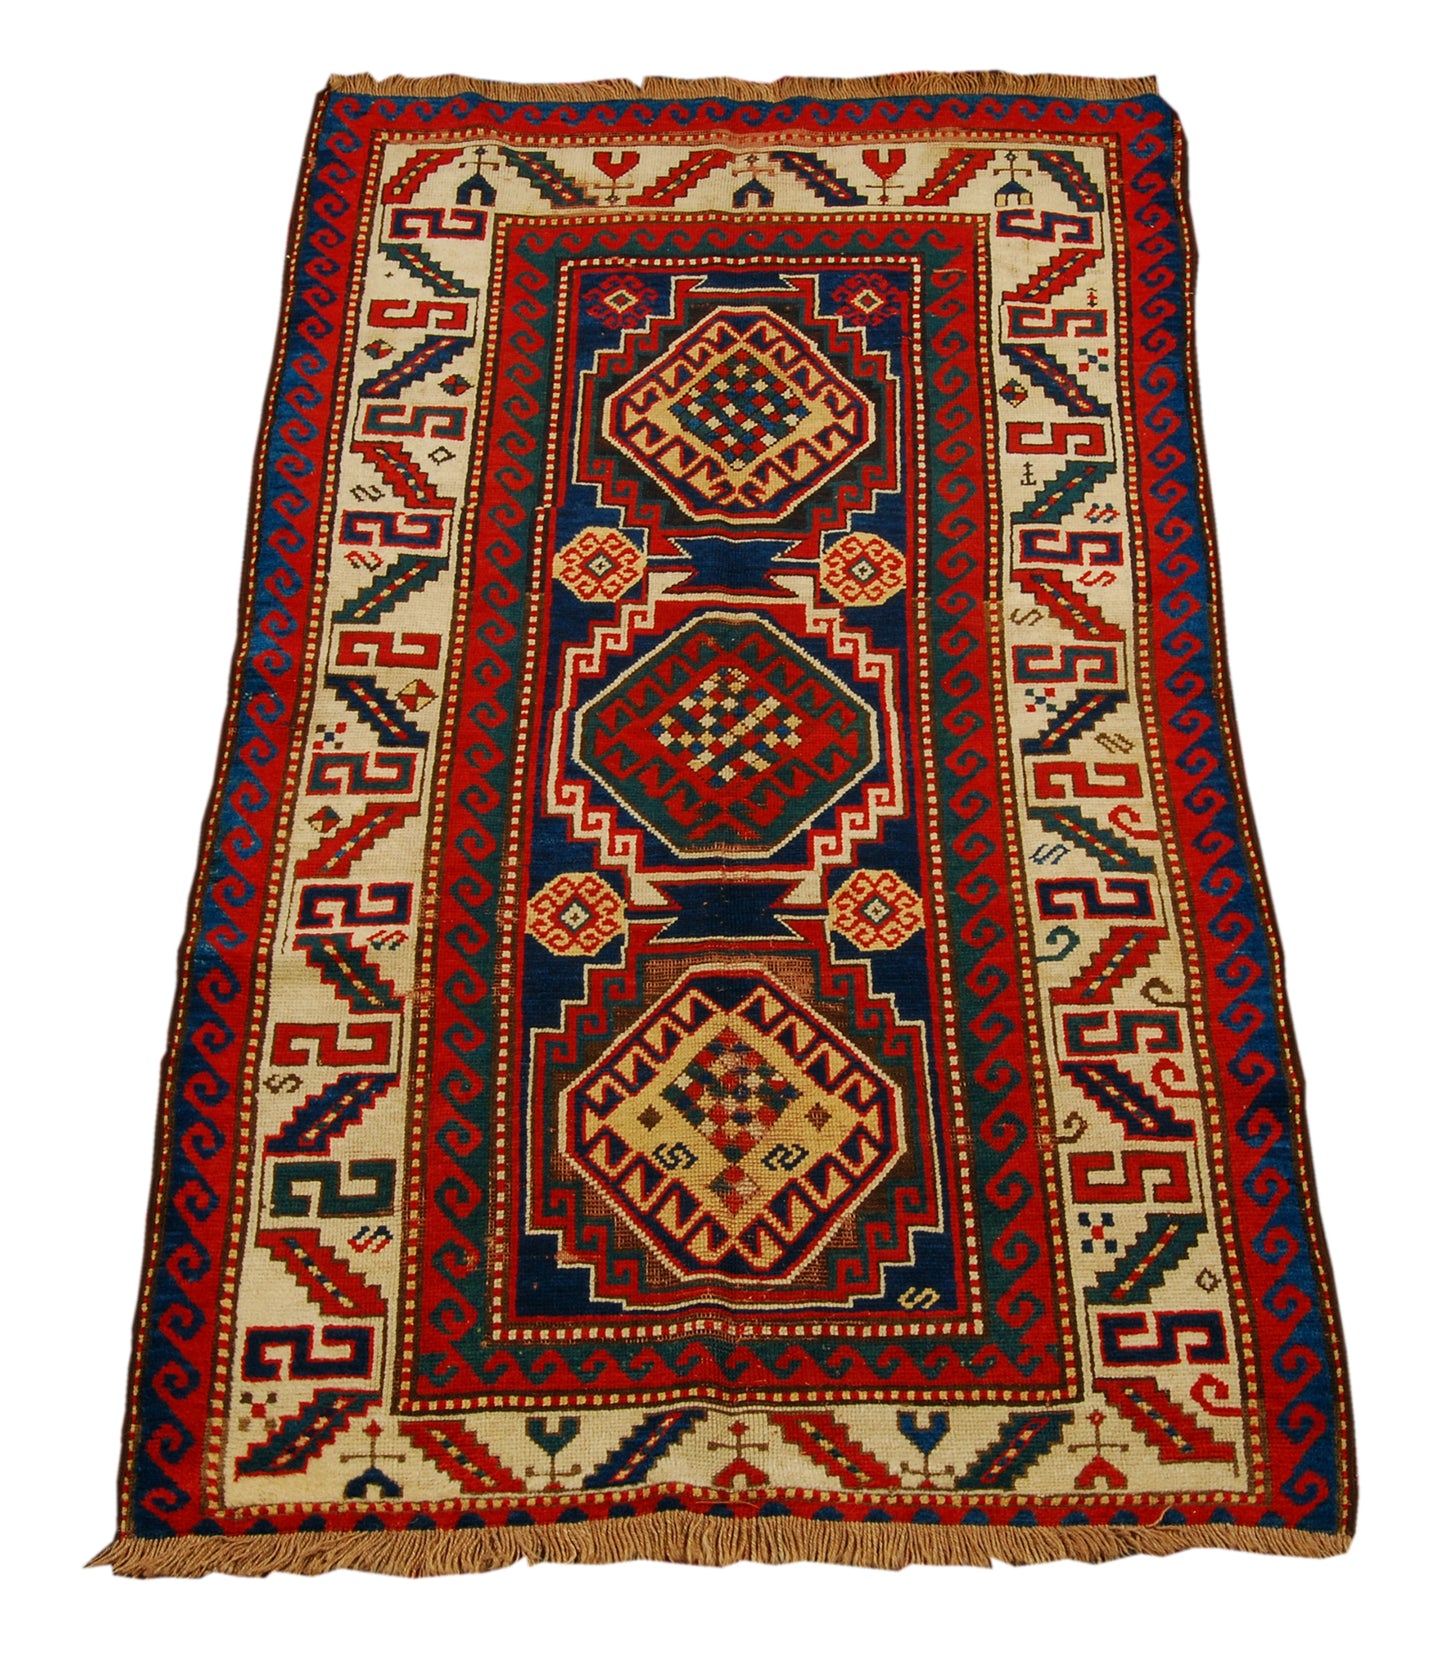 Hand made Antique Kazak / Shirvan Caucasic Carpets CM 190x103